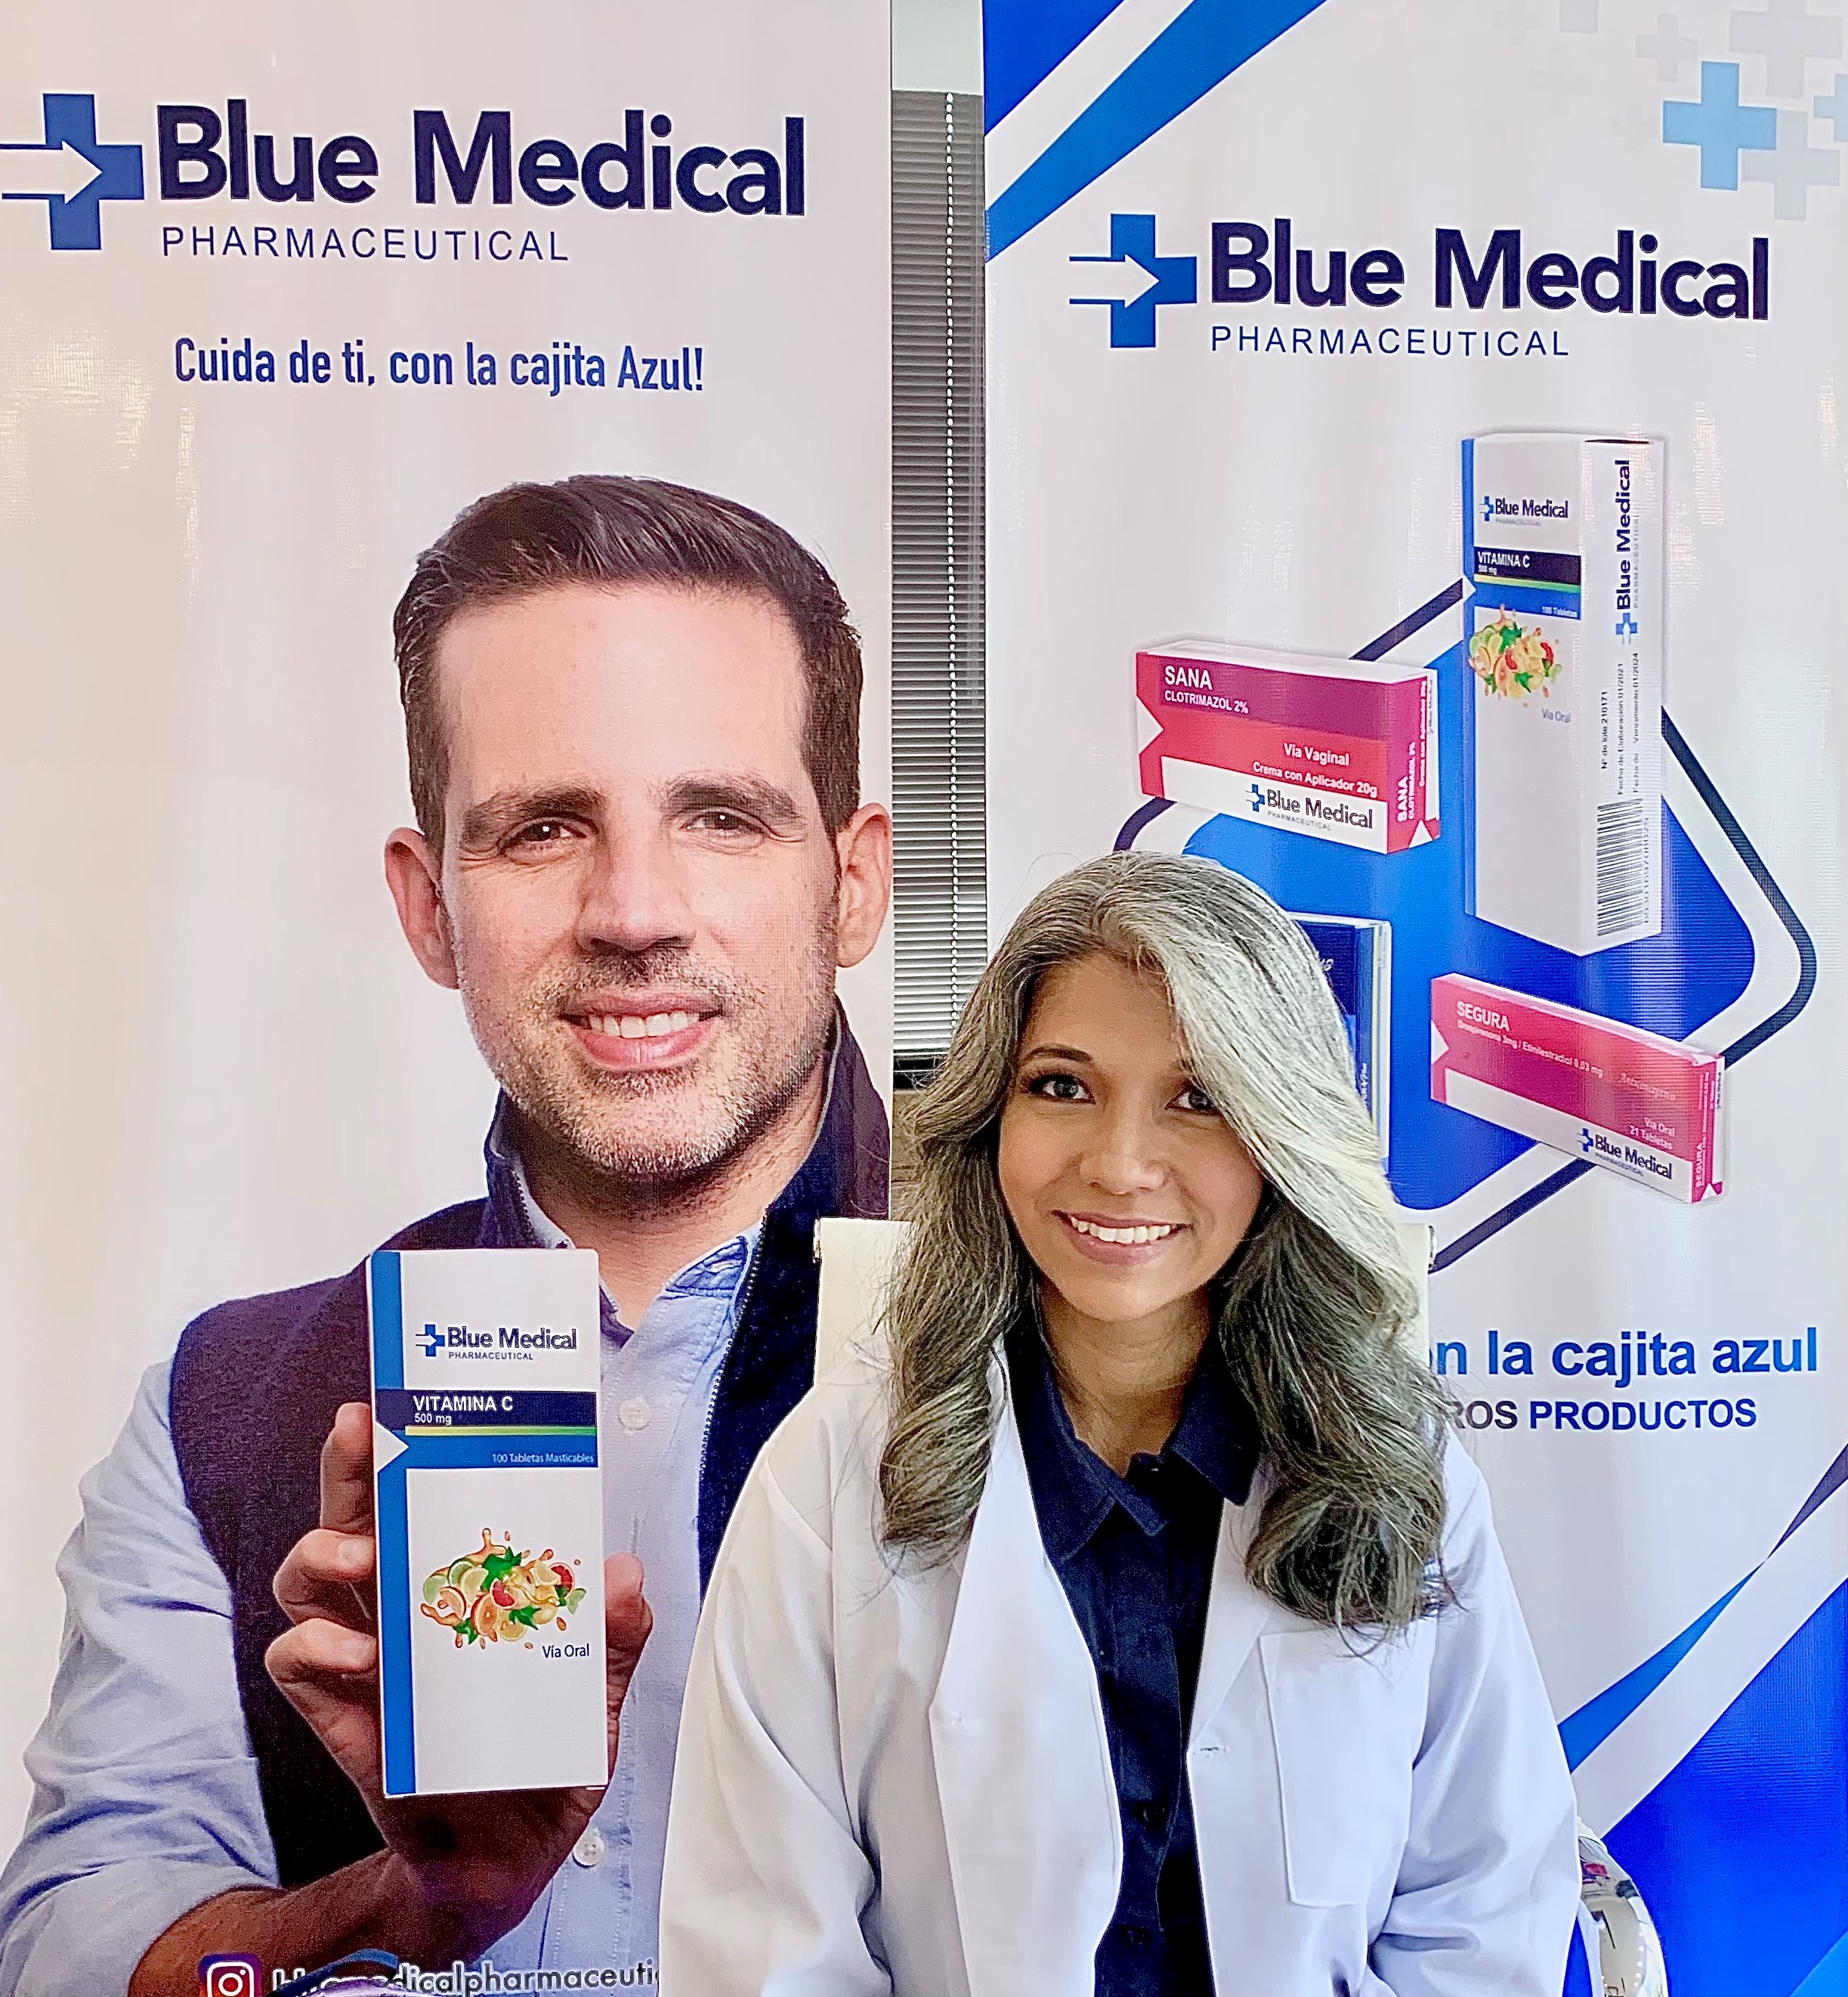 Blue Medical Pharmaceutical